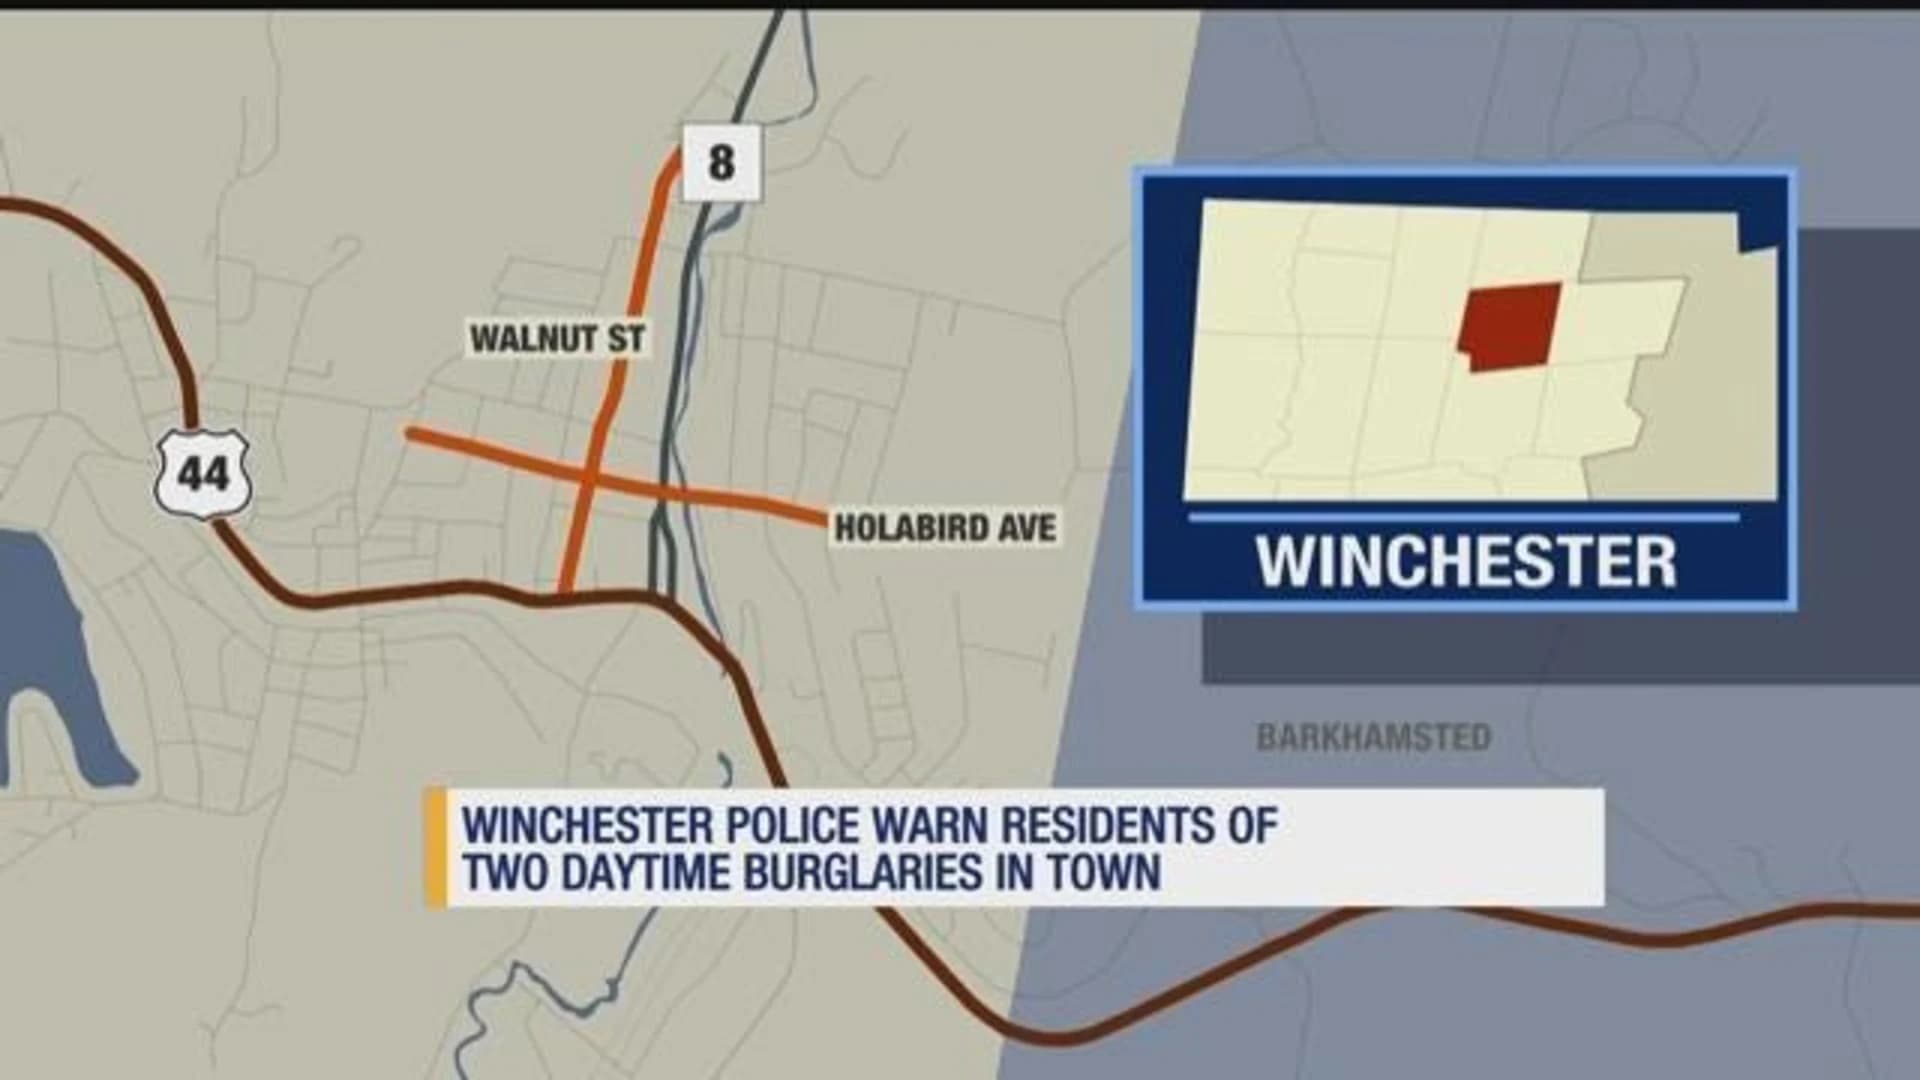 Winchester police warn residents of 2 daytime burglaries